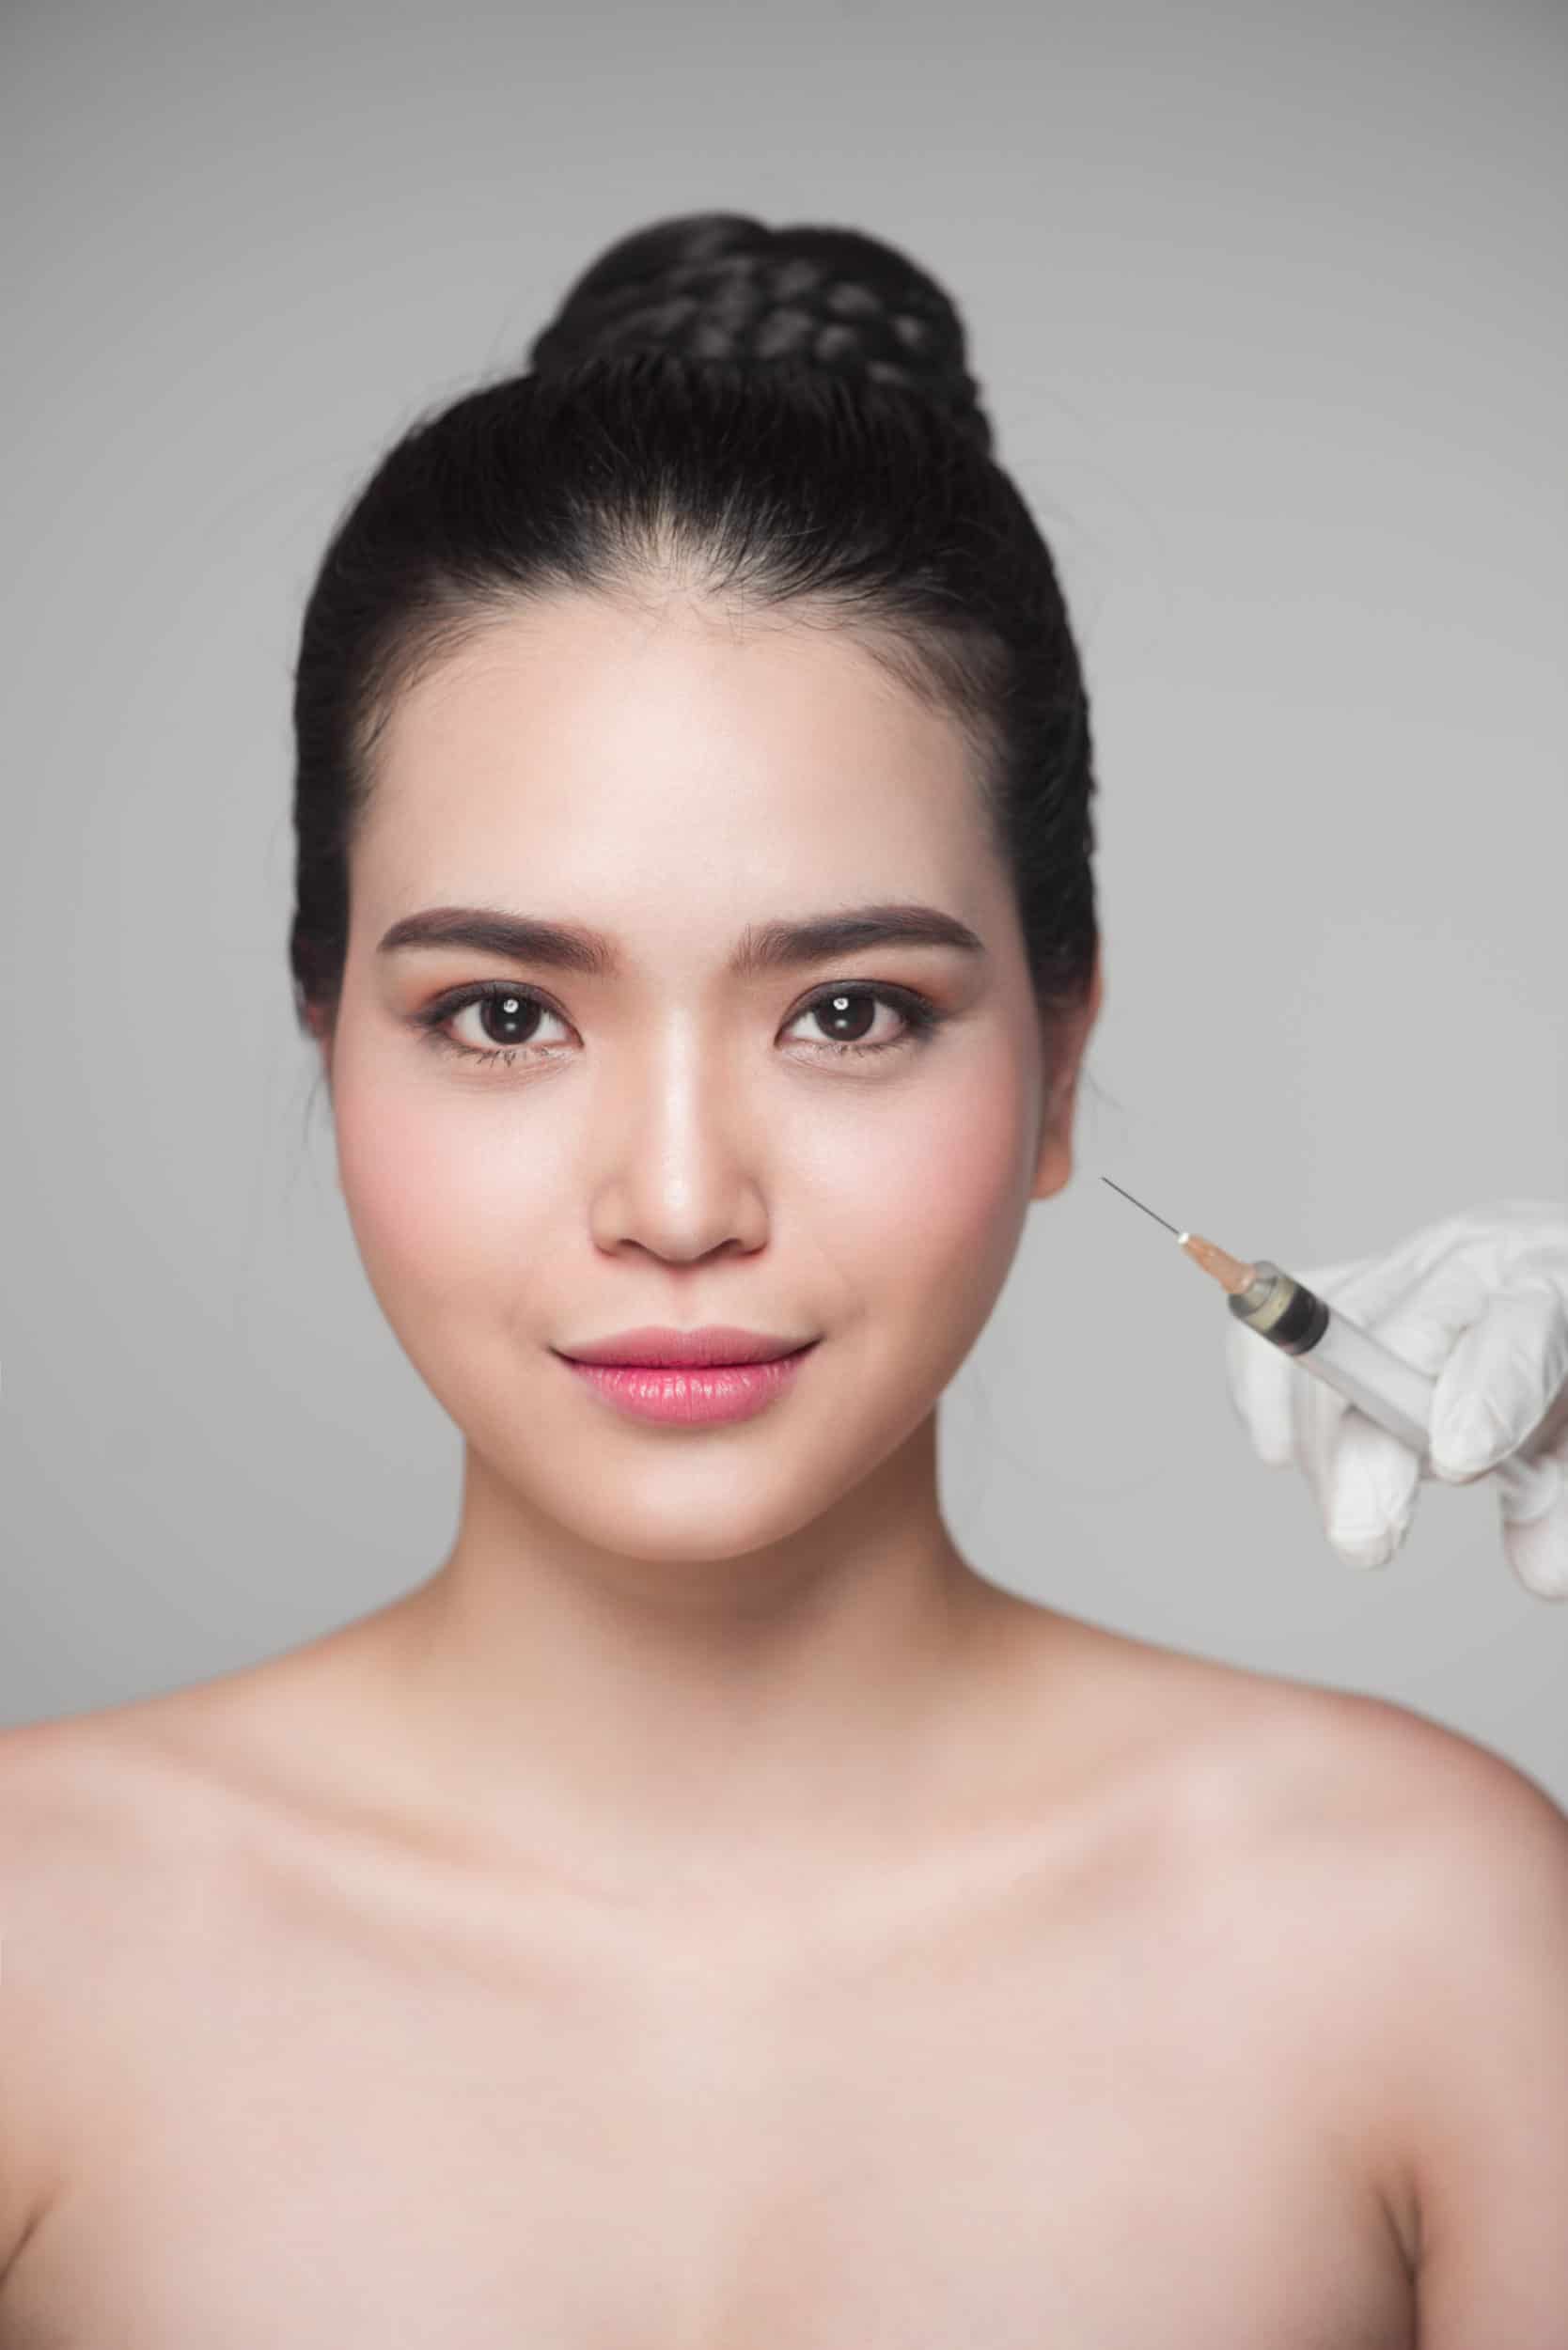 Beautiful asian woman gets deraml filler facial injections. Face aging injection.